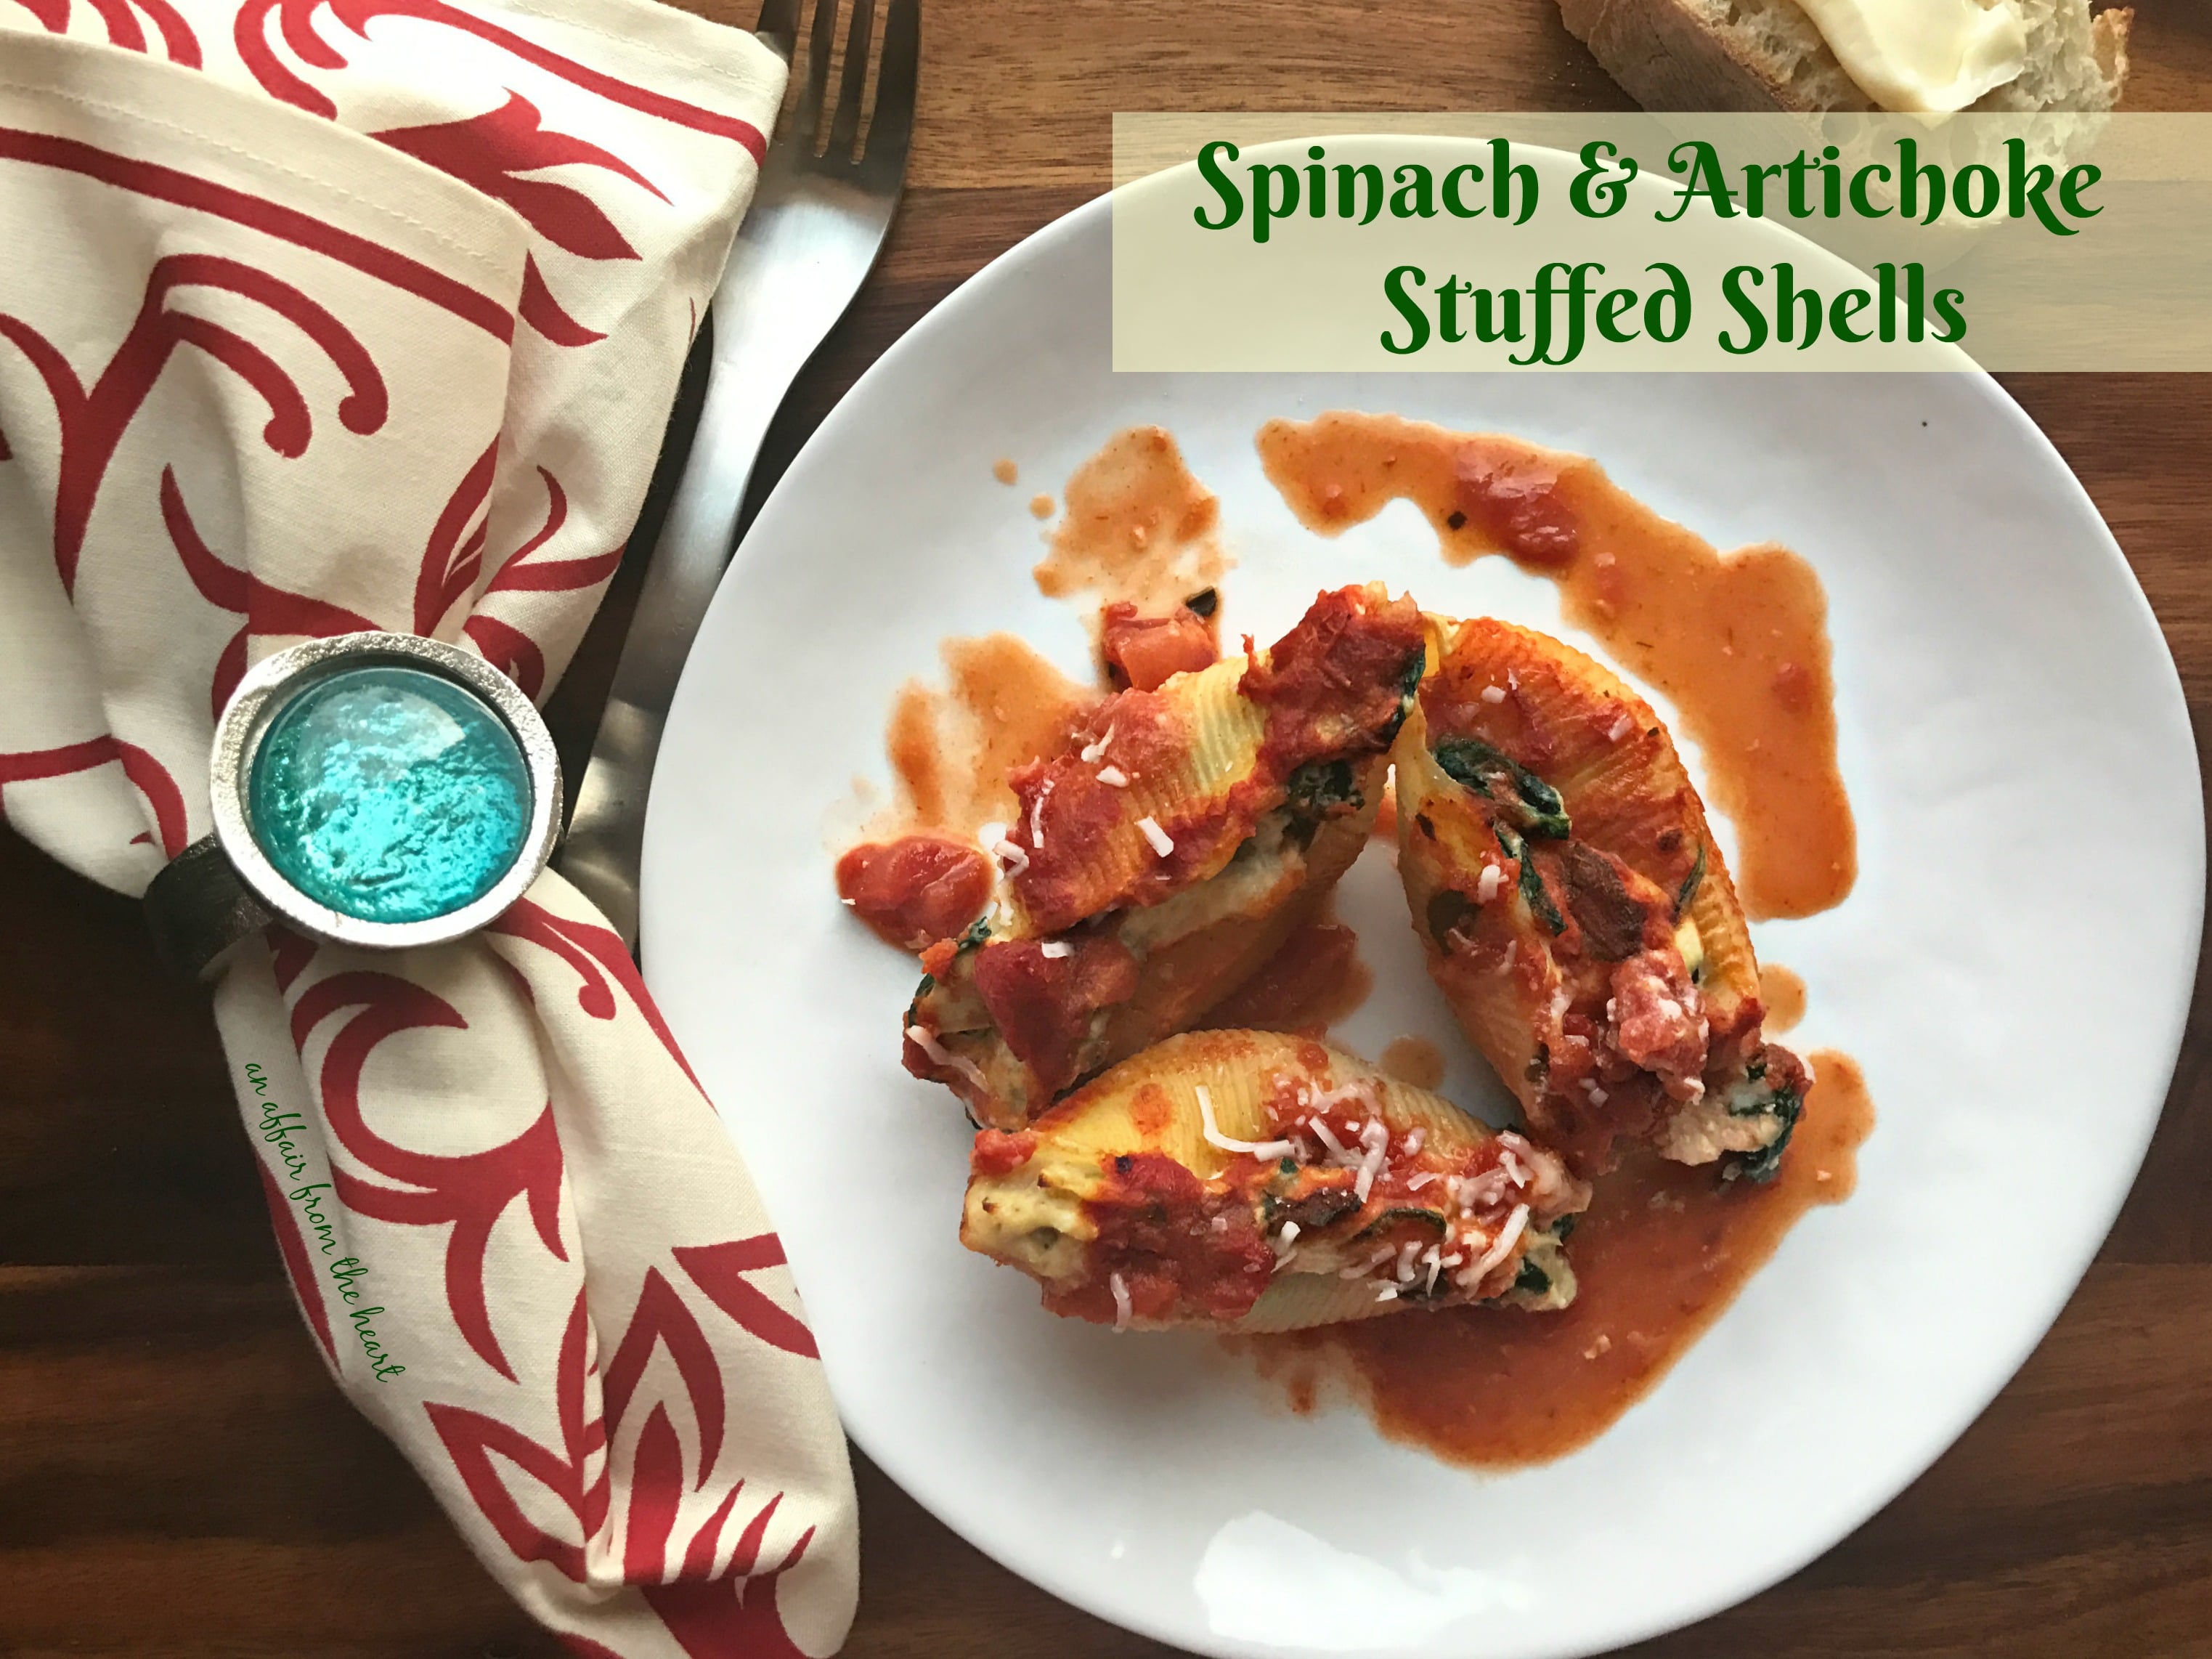 Spinach & Artichoke Stuffed Shells